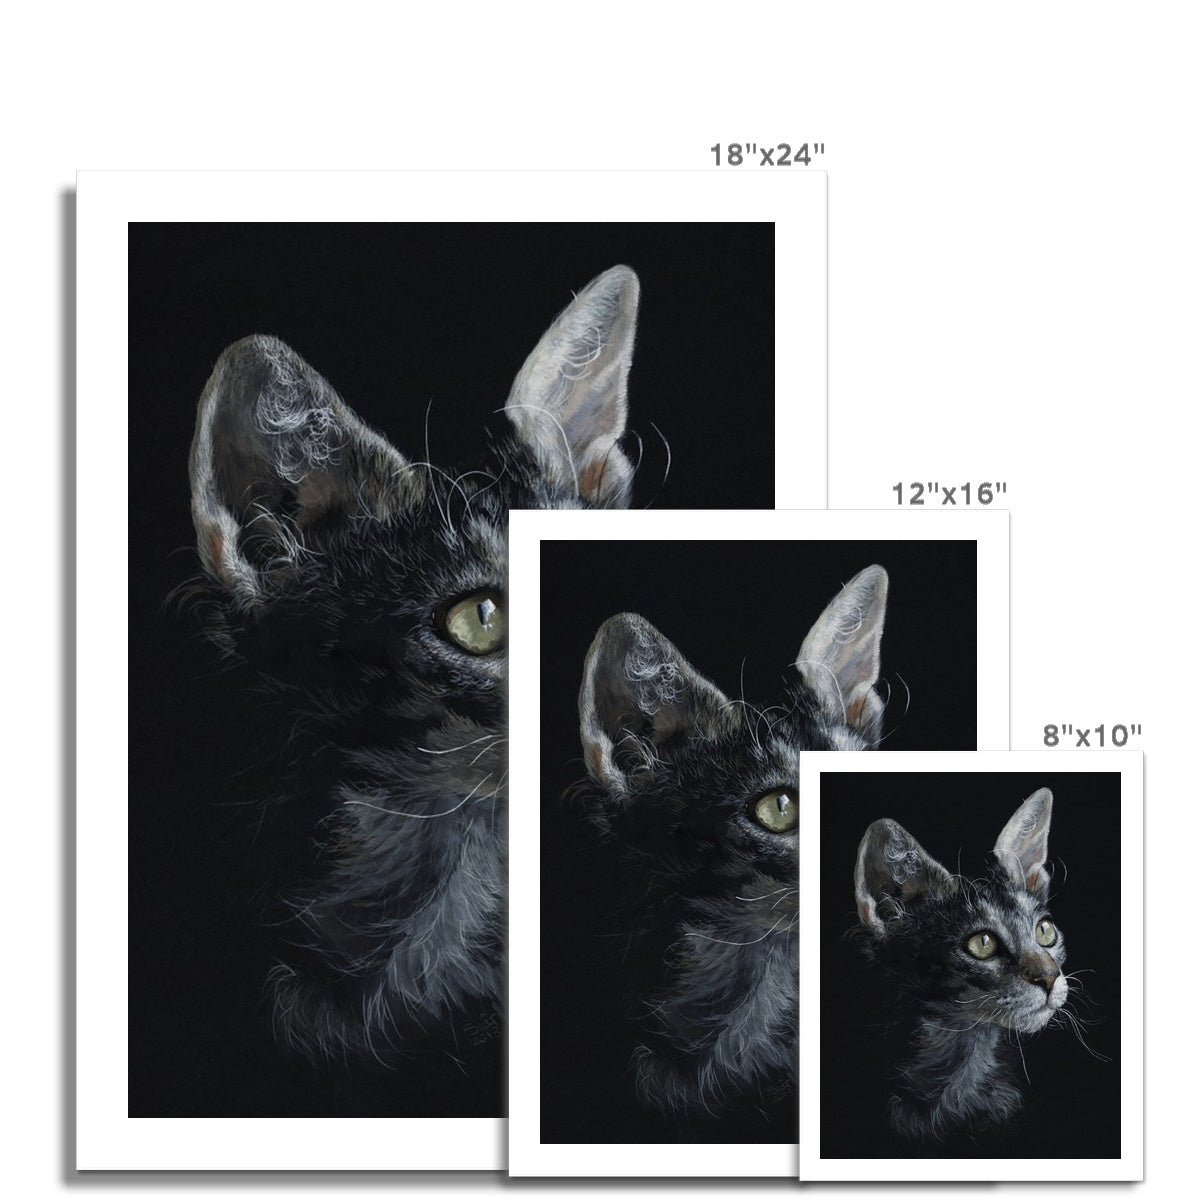 LaPerm Cat Fine Art Print